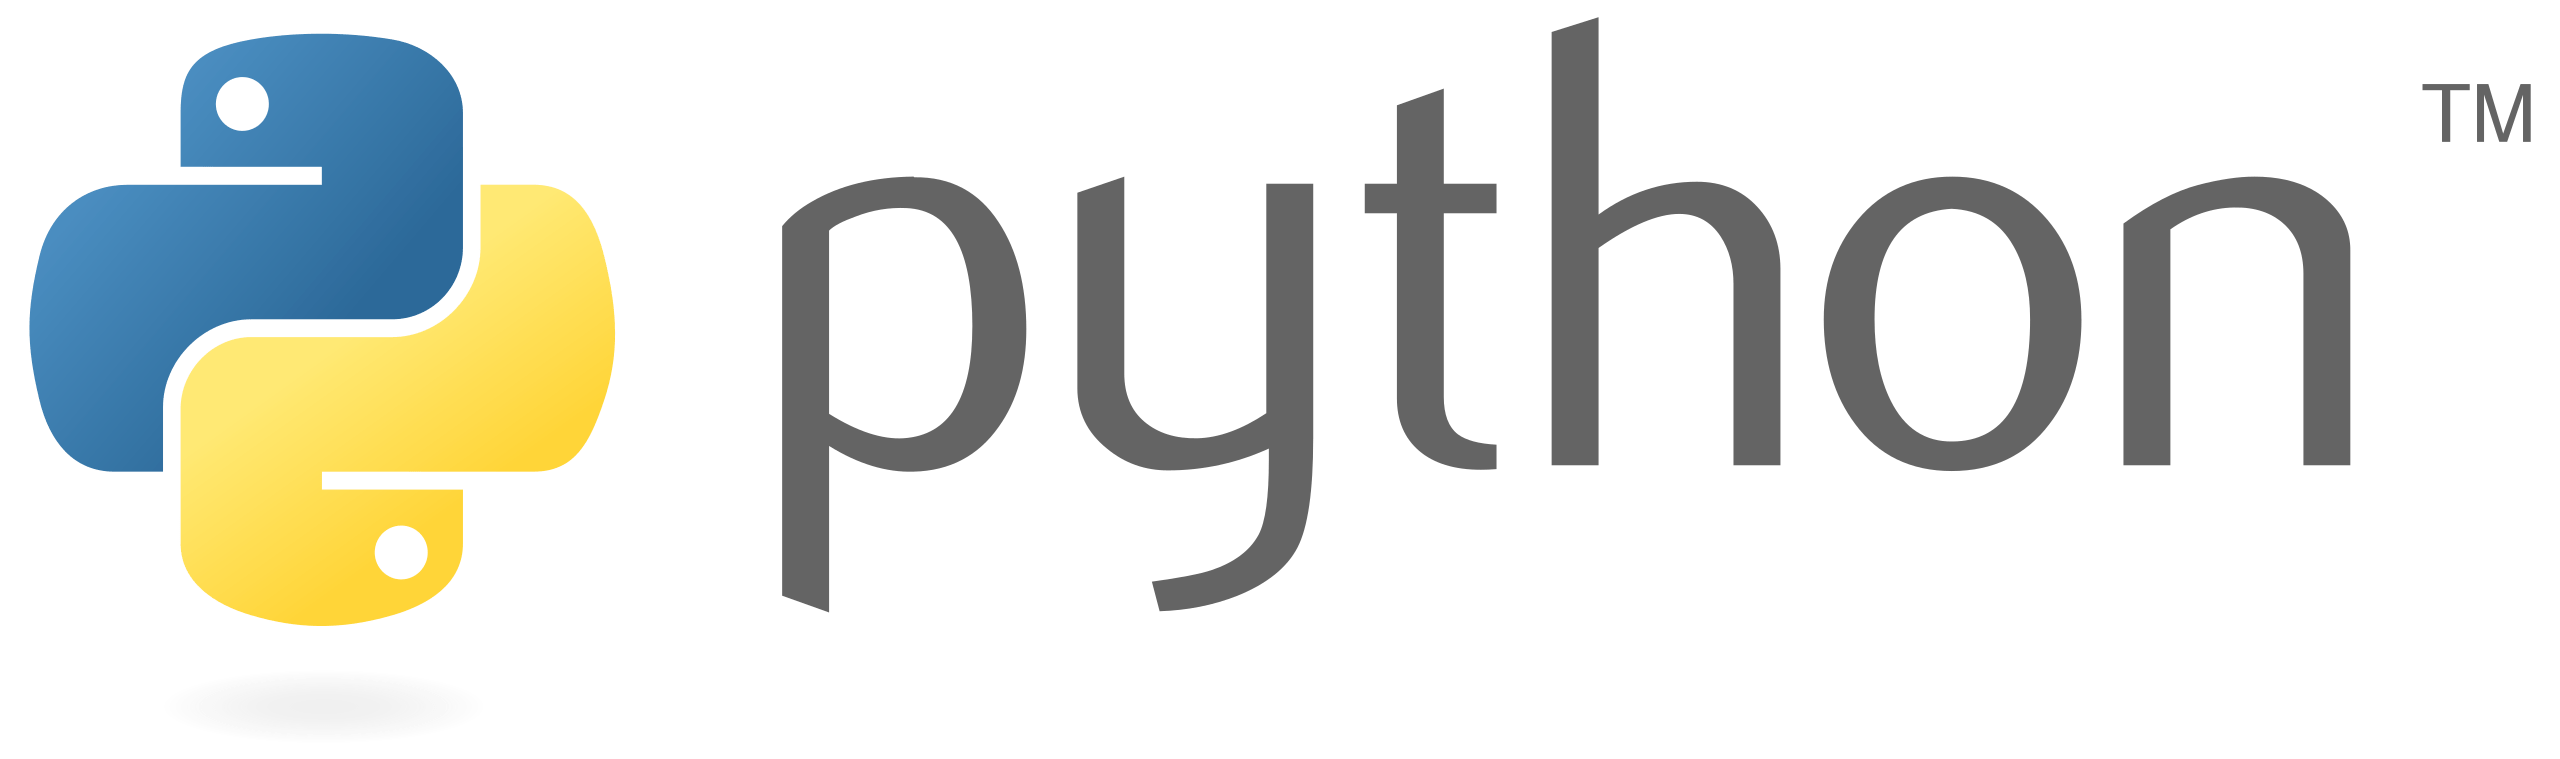 Python logo and wordmark.svg min